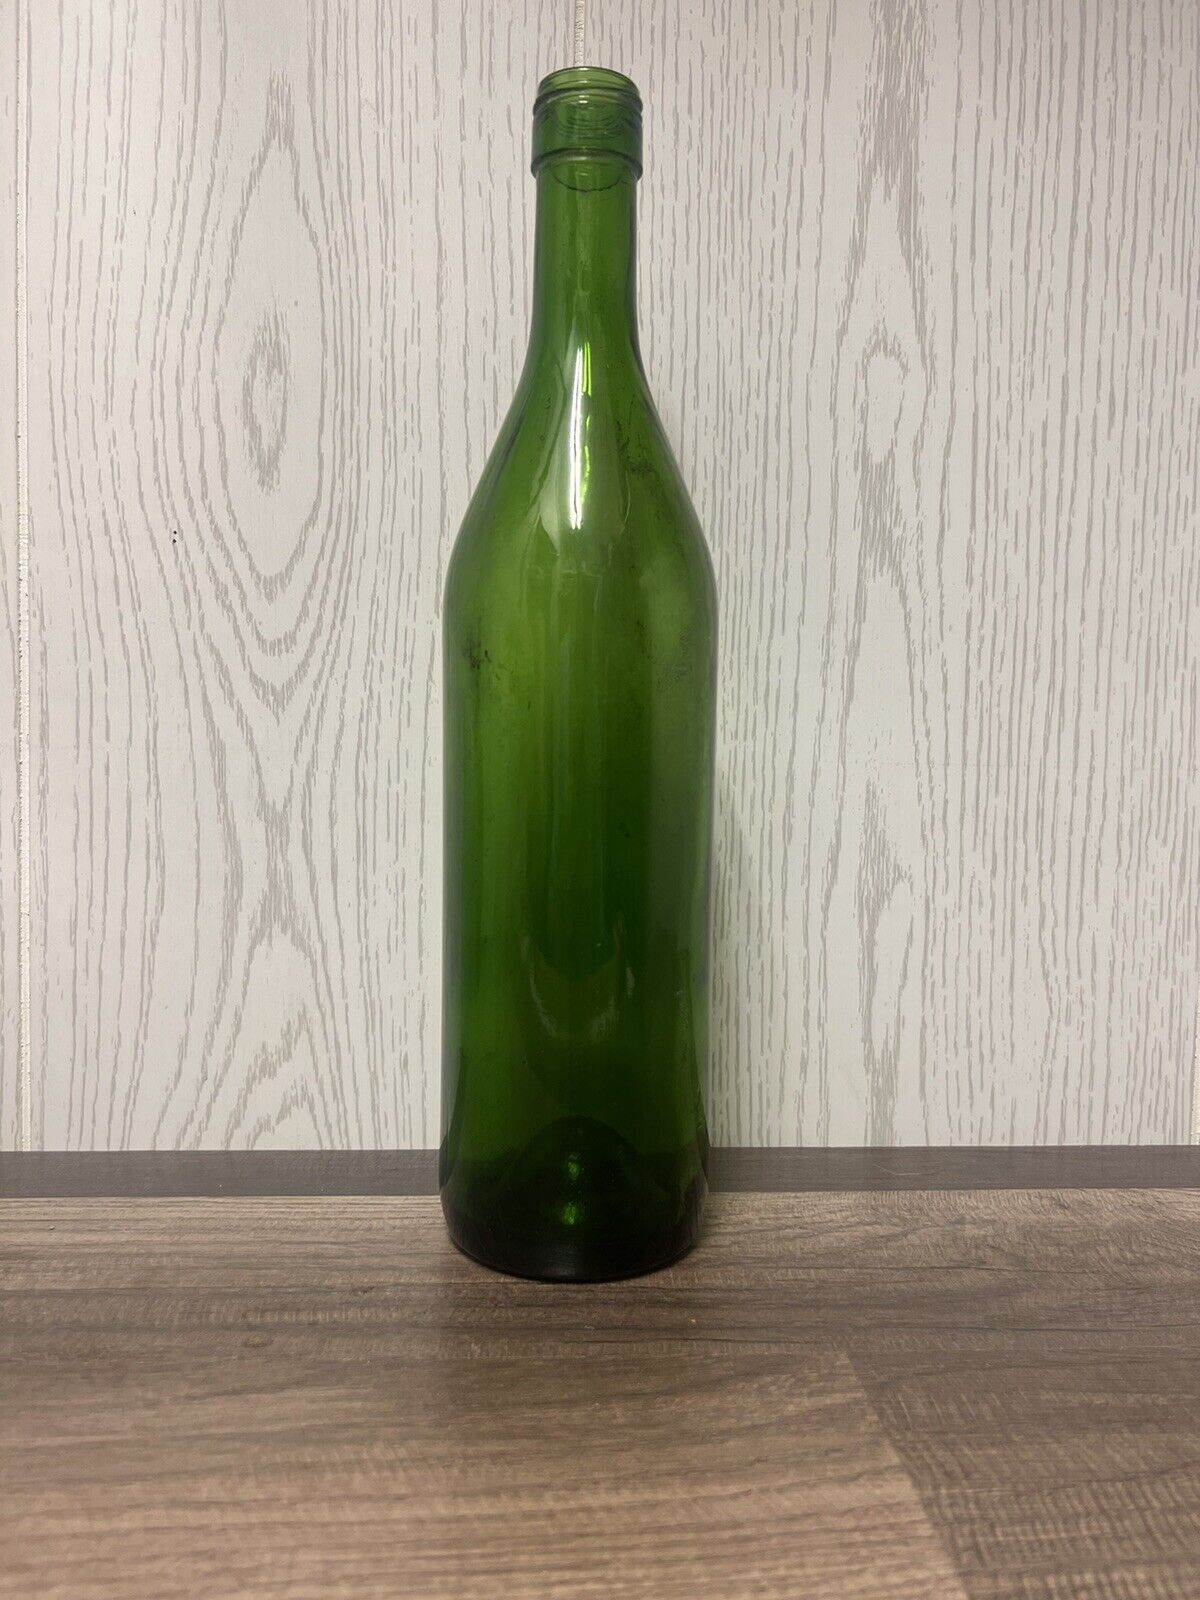 vintage green glass wine bottle